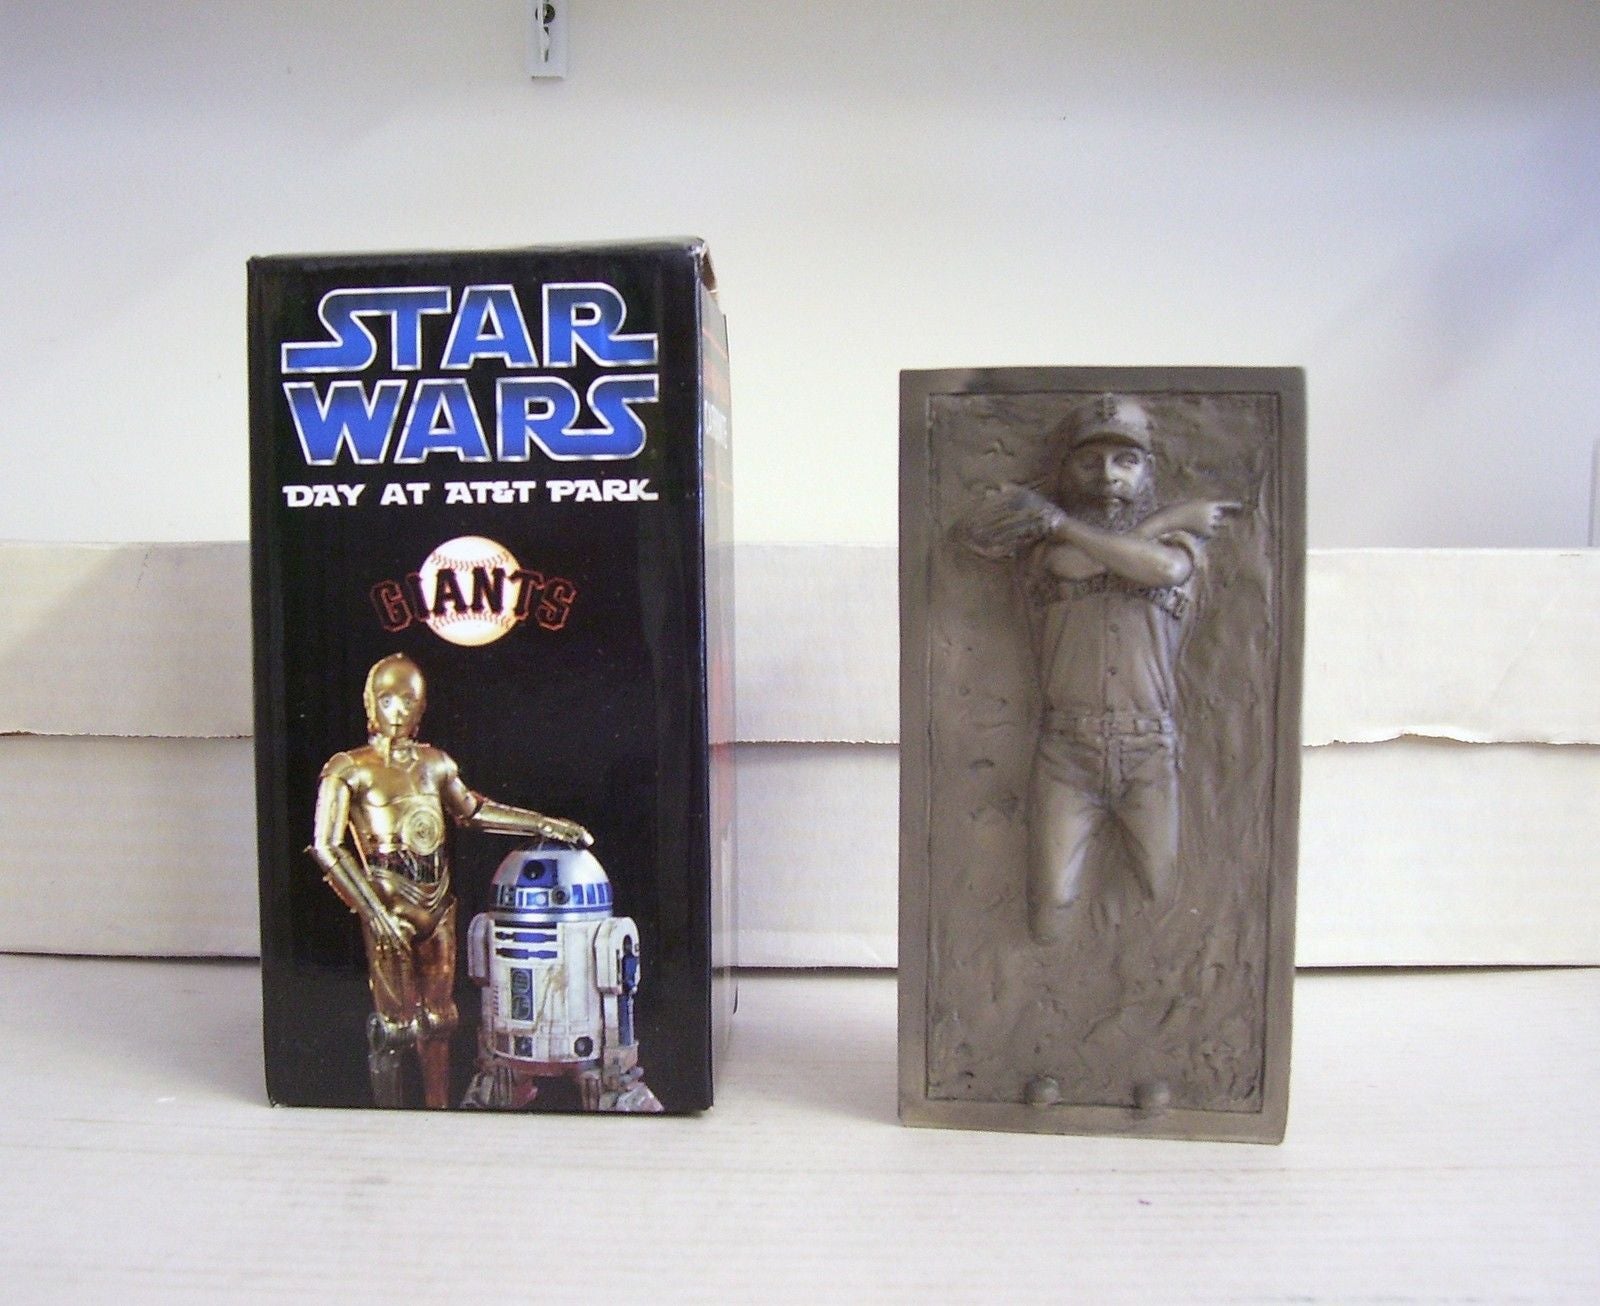 Brian Wilson Han Solo Carbonite Star Wars Statue San Francisco Giants Bobblehead